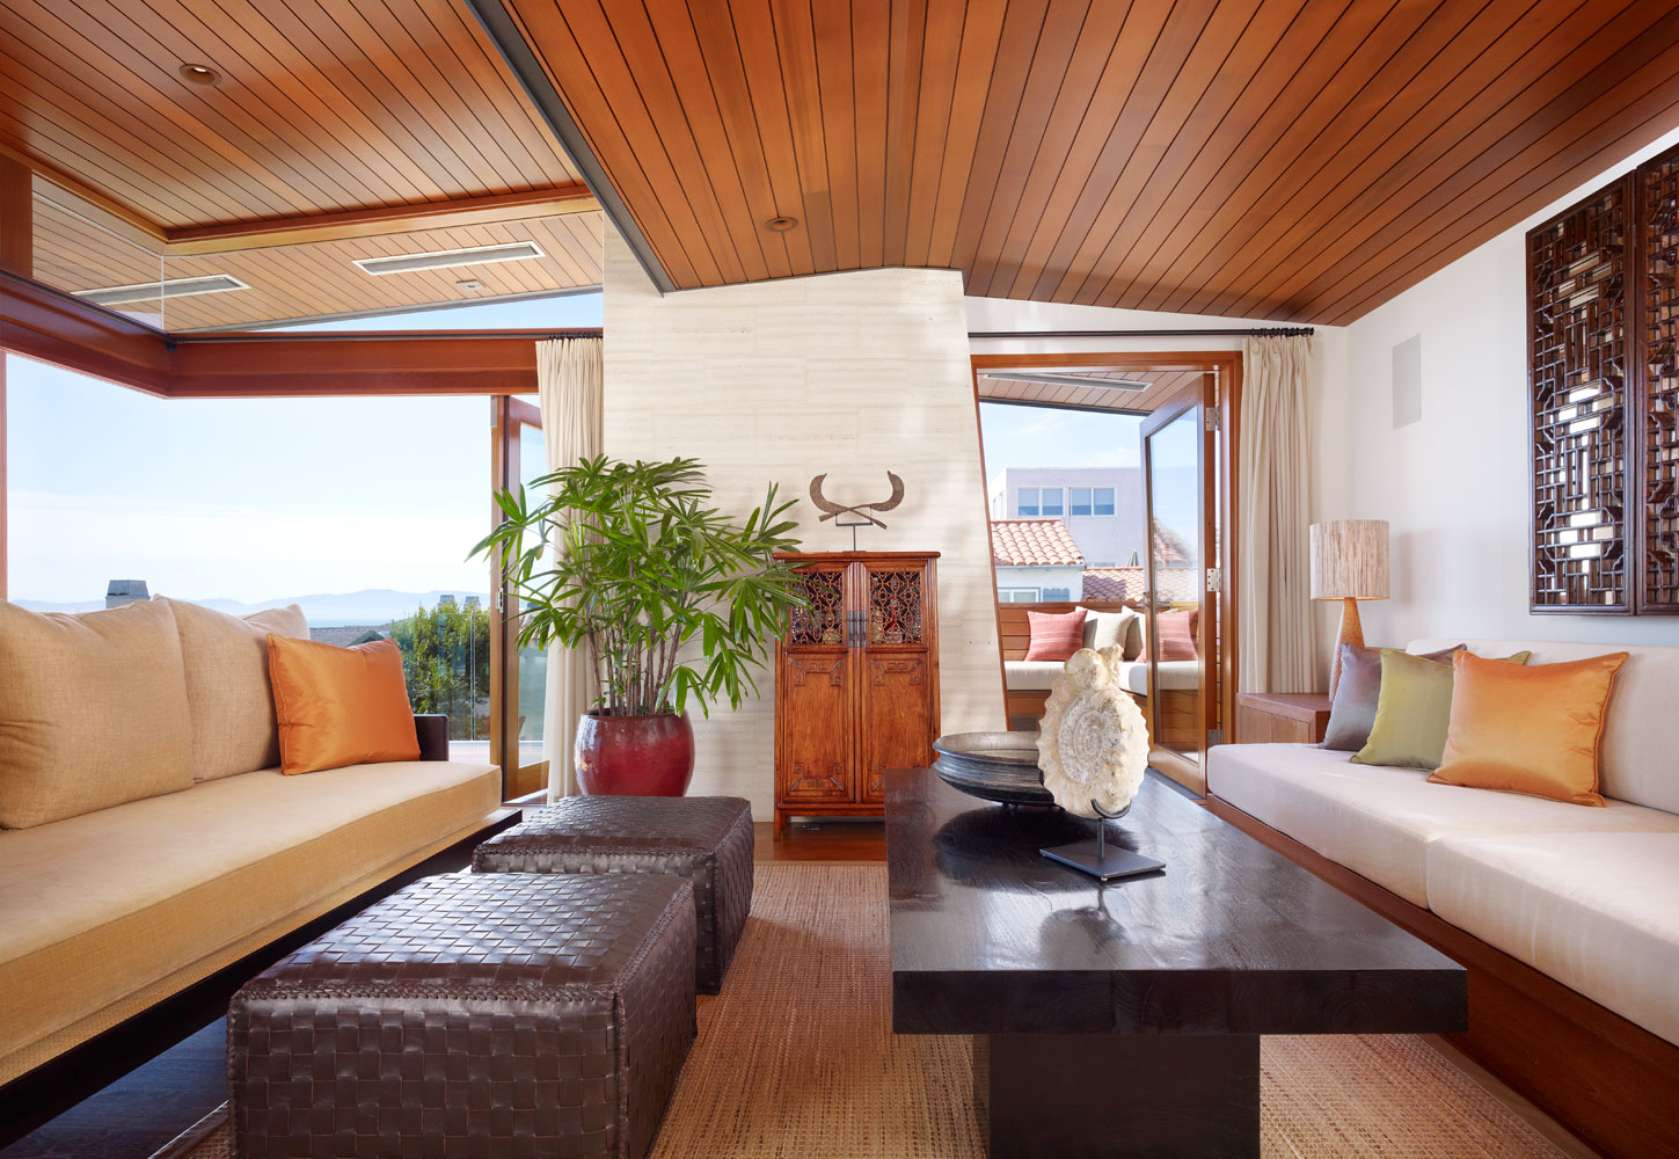 Interior Design Ideas For Living Room Ceiling